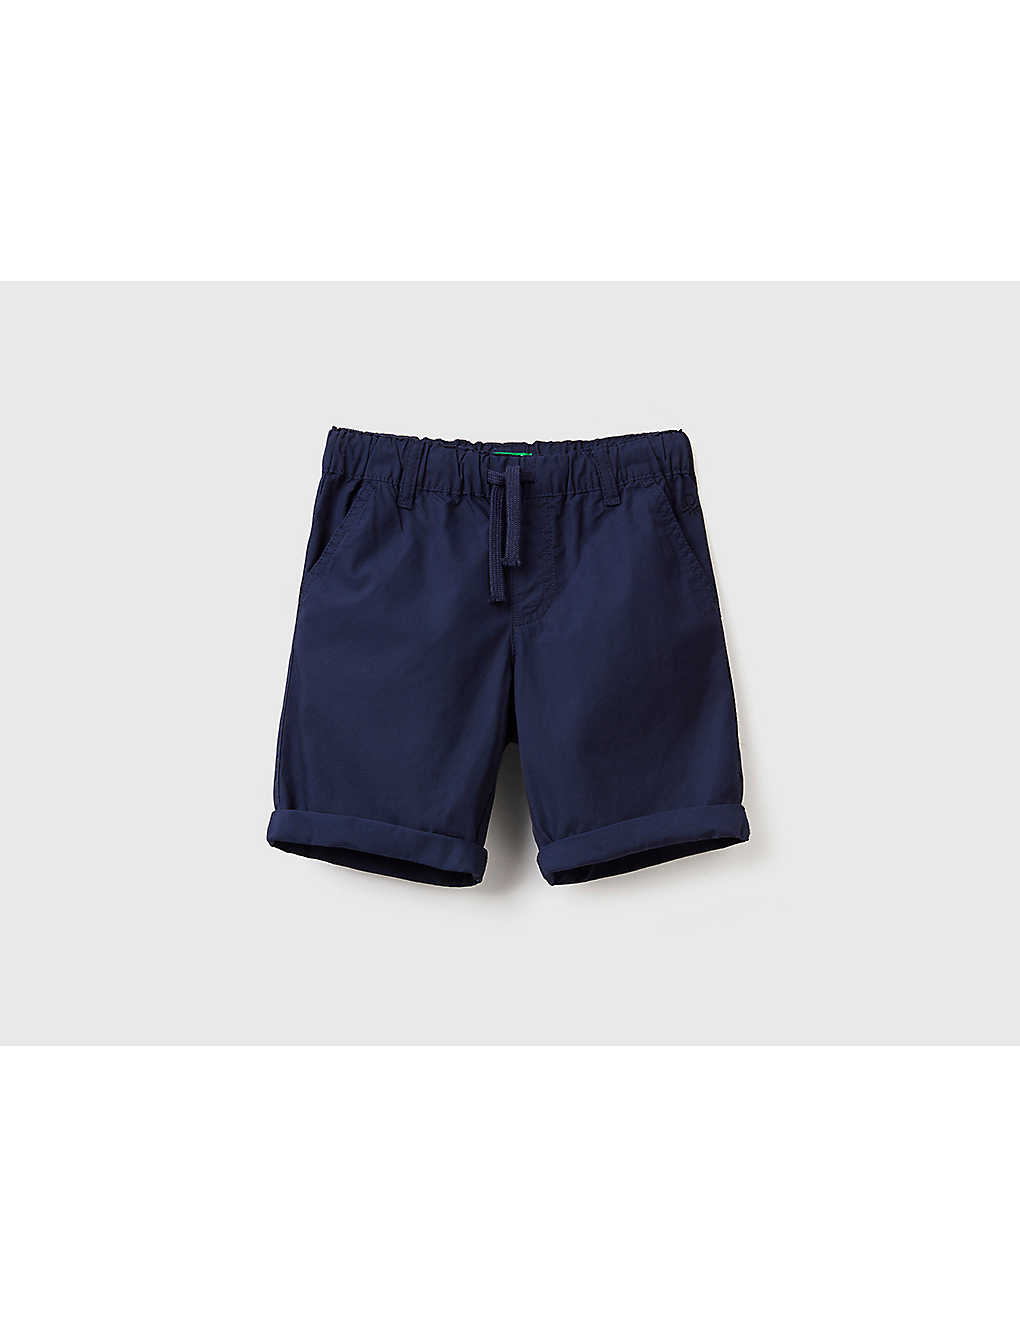 Benetton Boys Navy Blue Kids Drawstring Cotton Shorts 1-6 Years